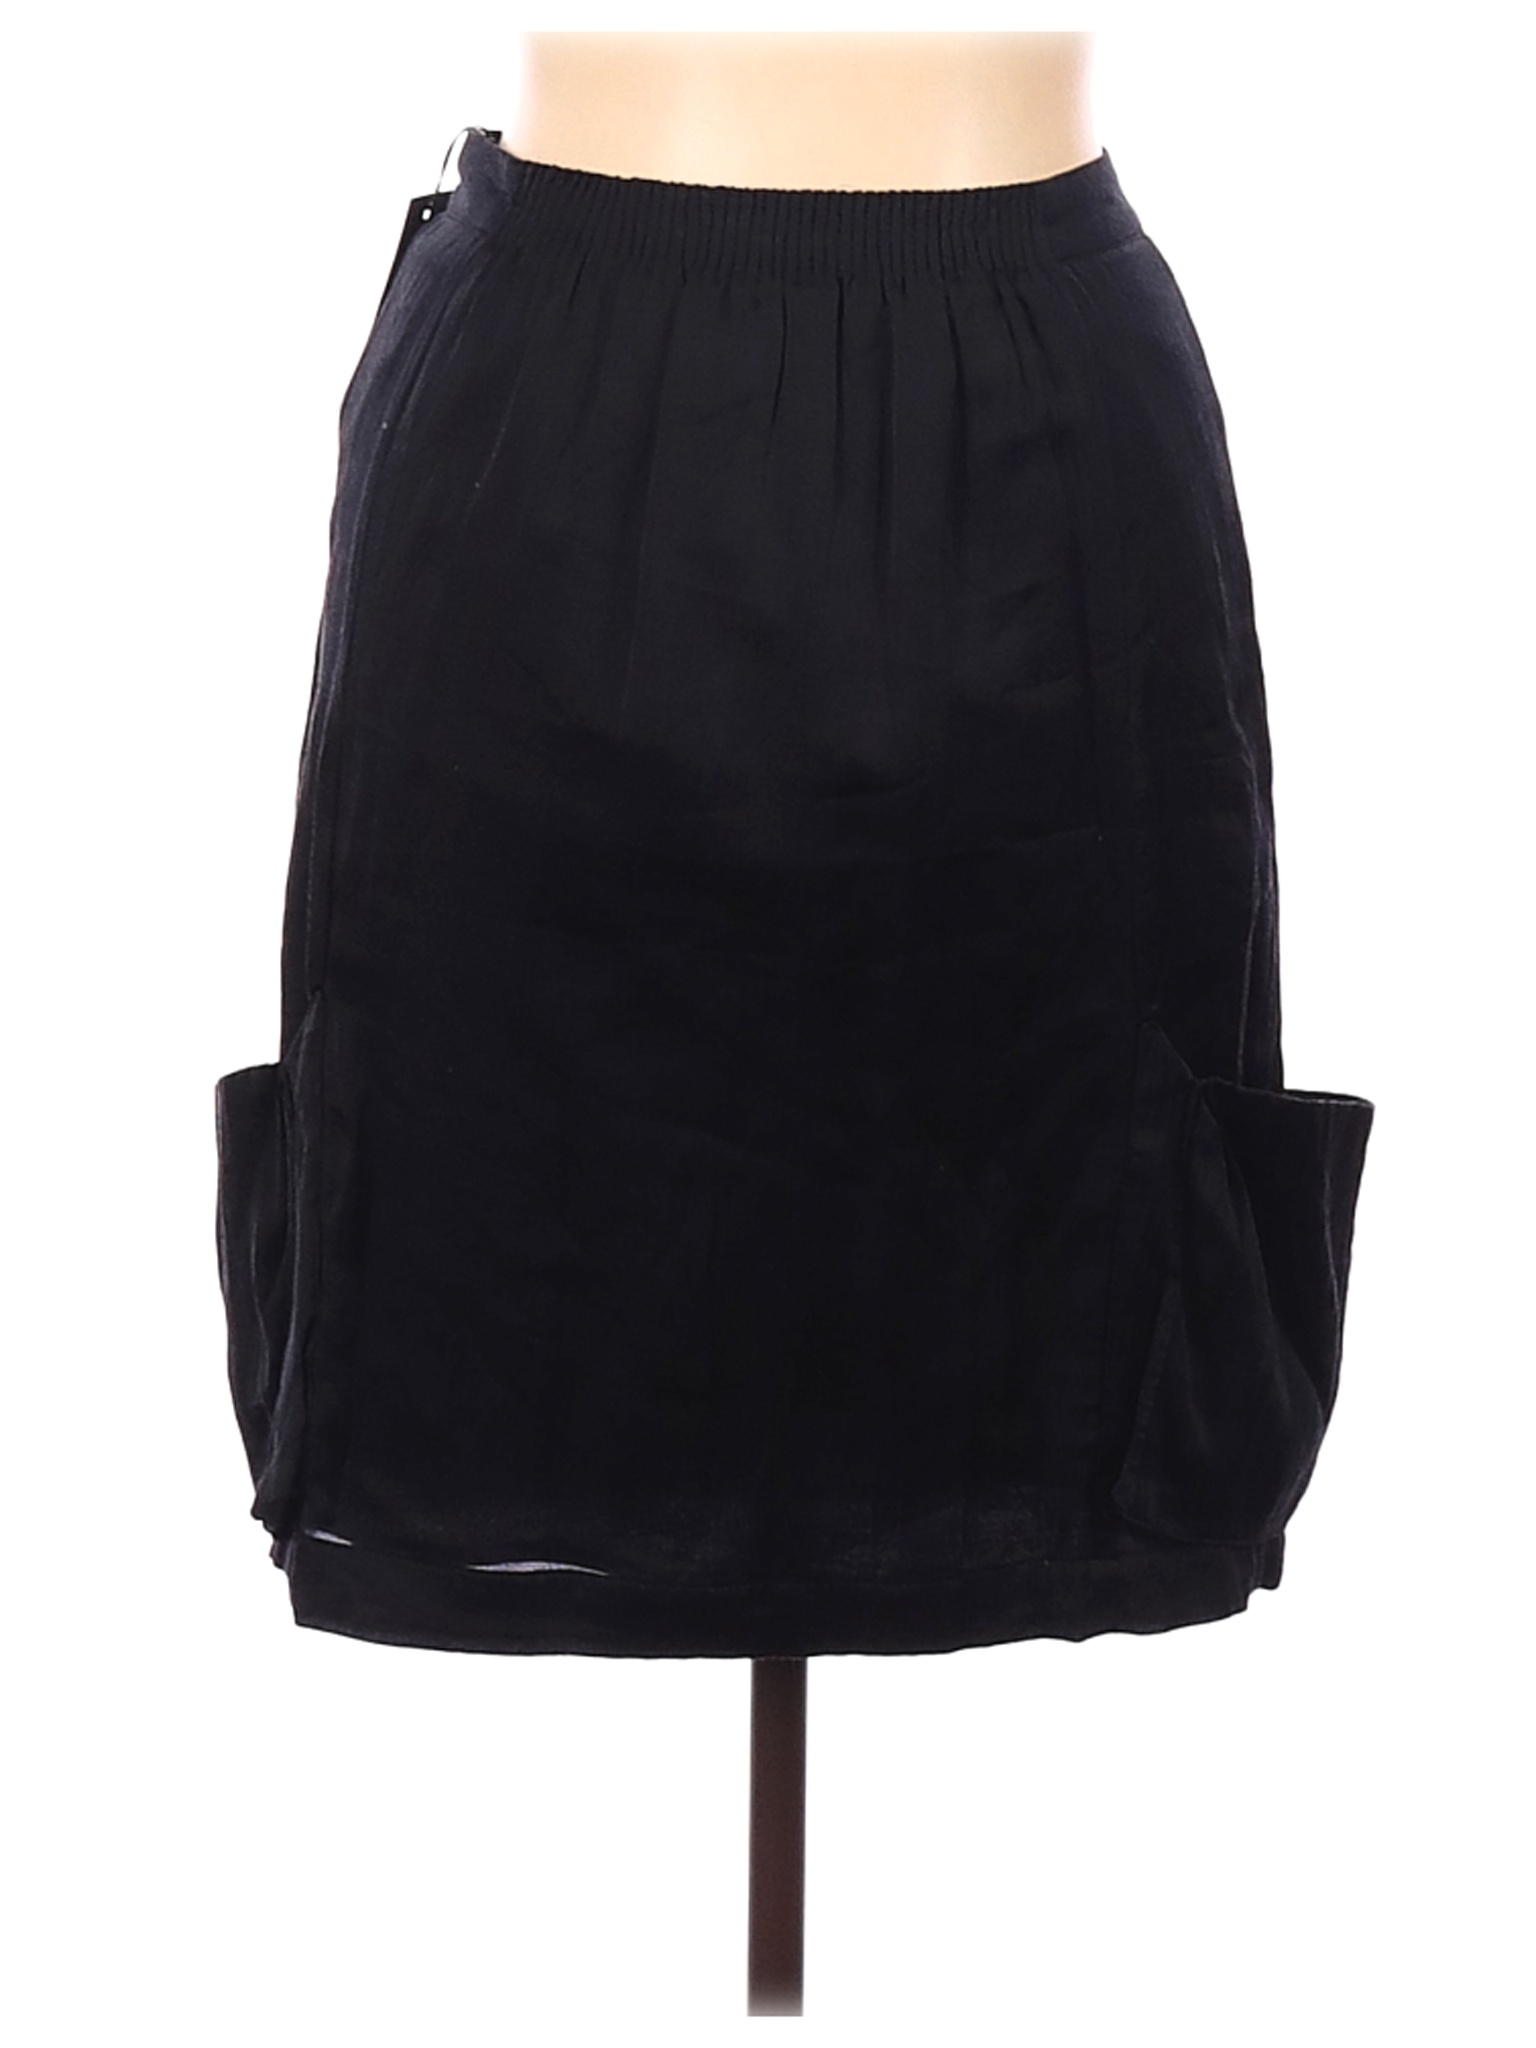 NWT Anna Molinari Women Black Casual Skirt 42 eur | eBay